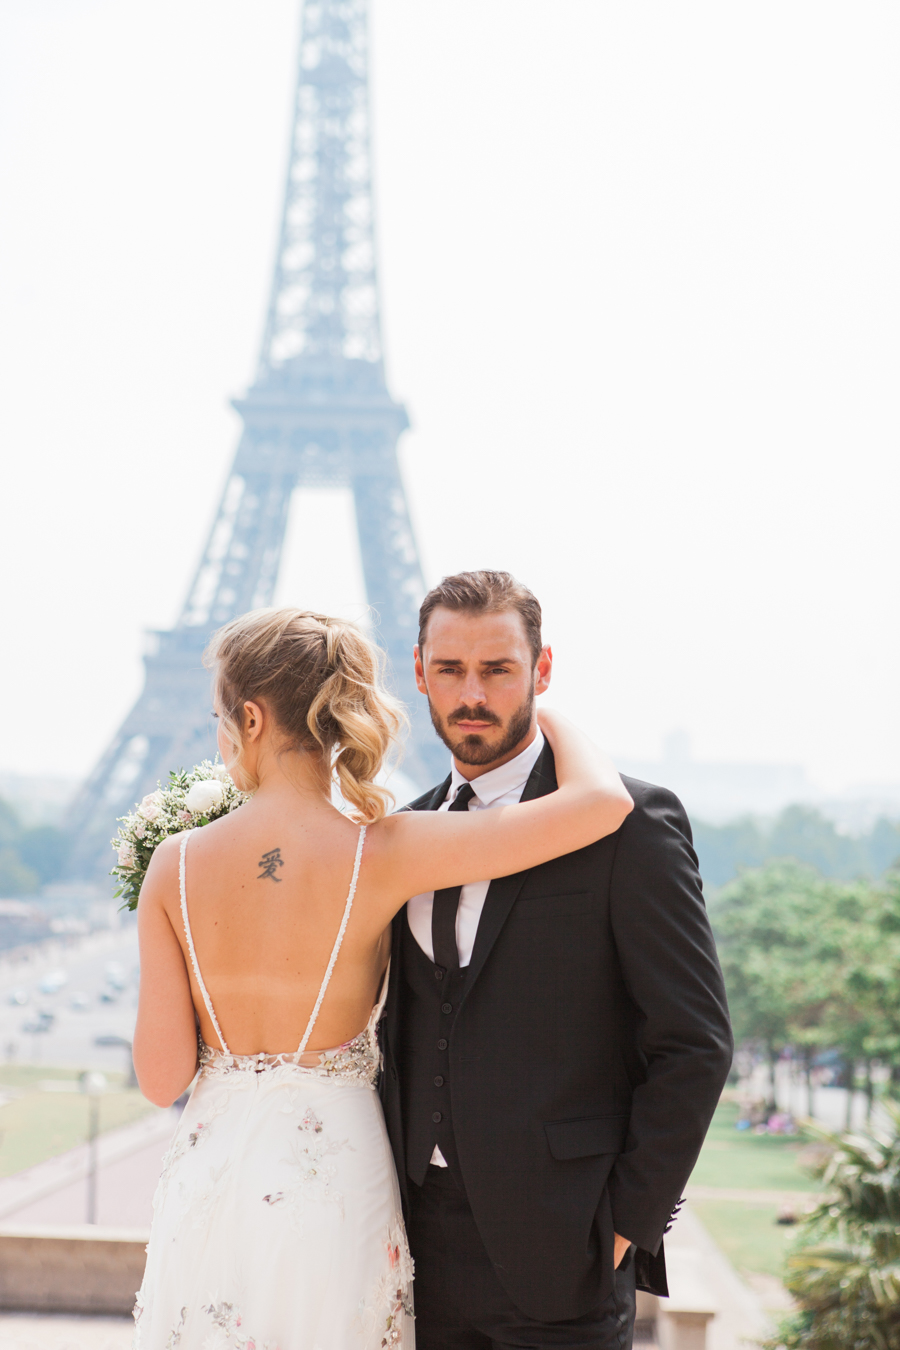 Paris destination wedding photography inspiration by Amanda Karen Photography